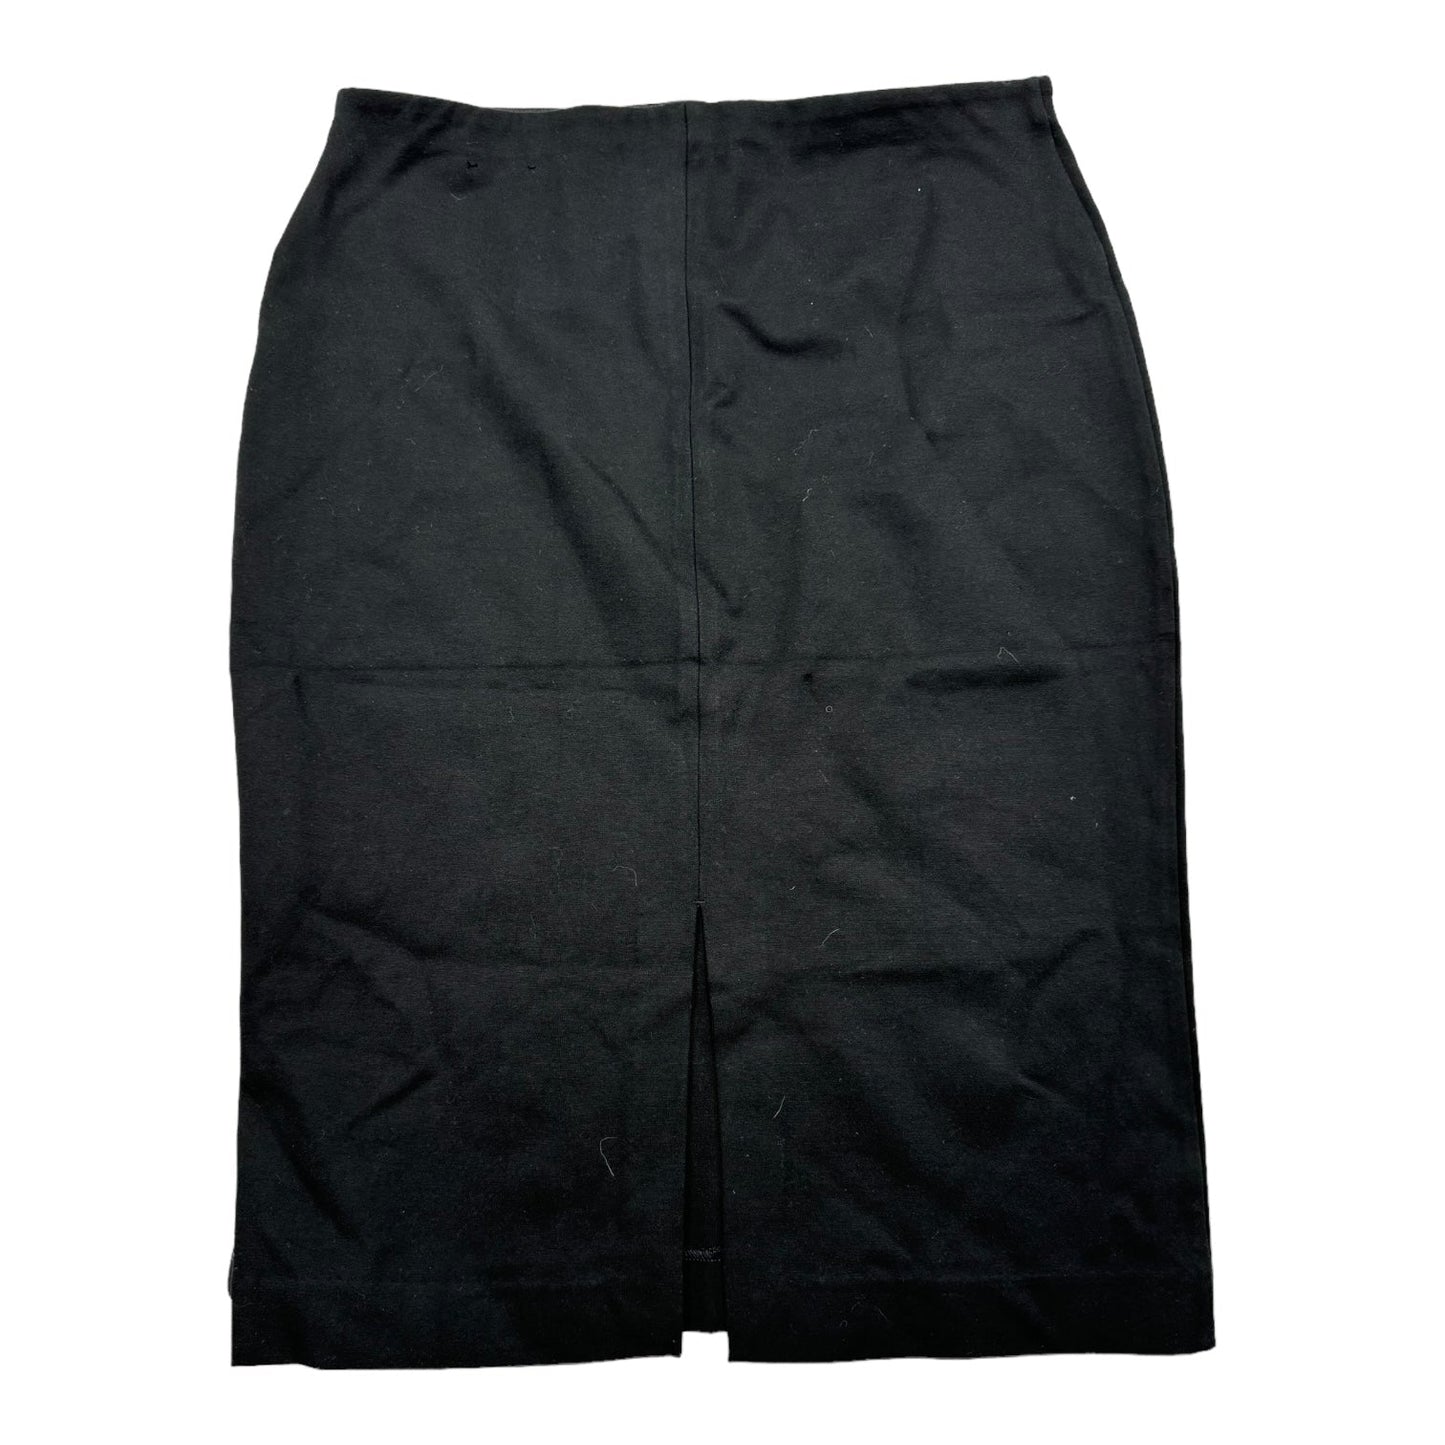 Black Skirt Midi Express, Size M